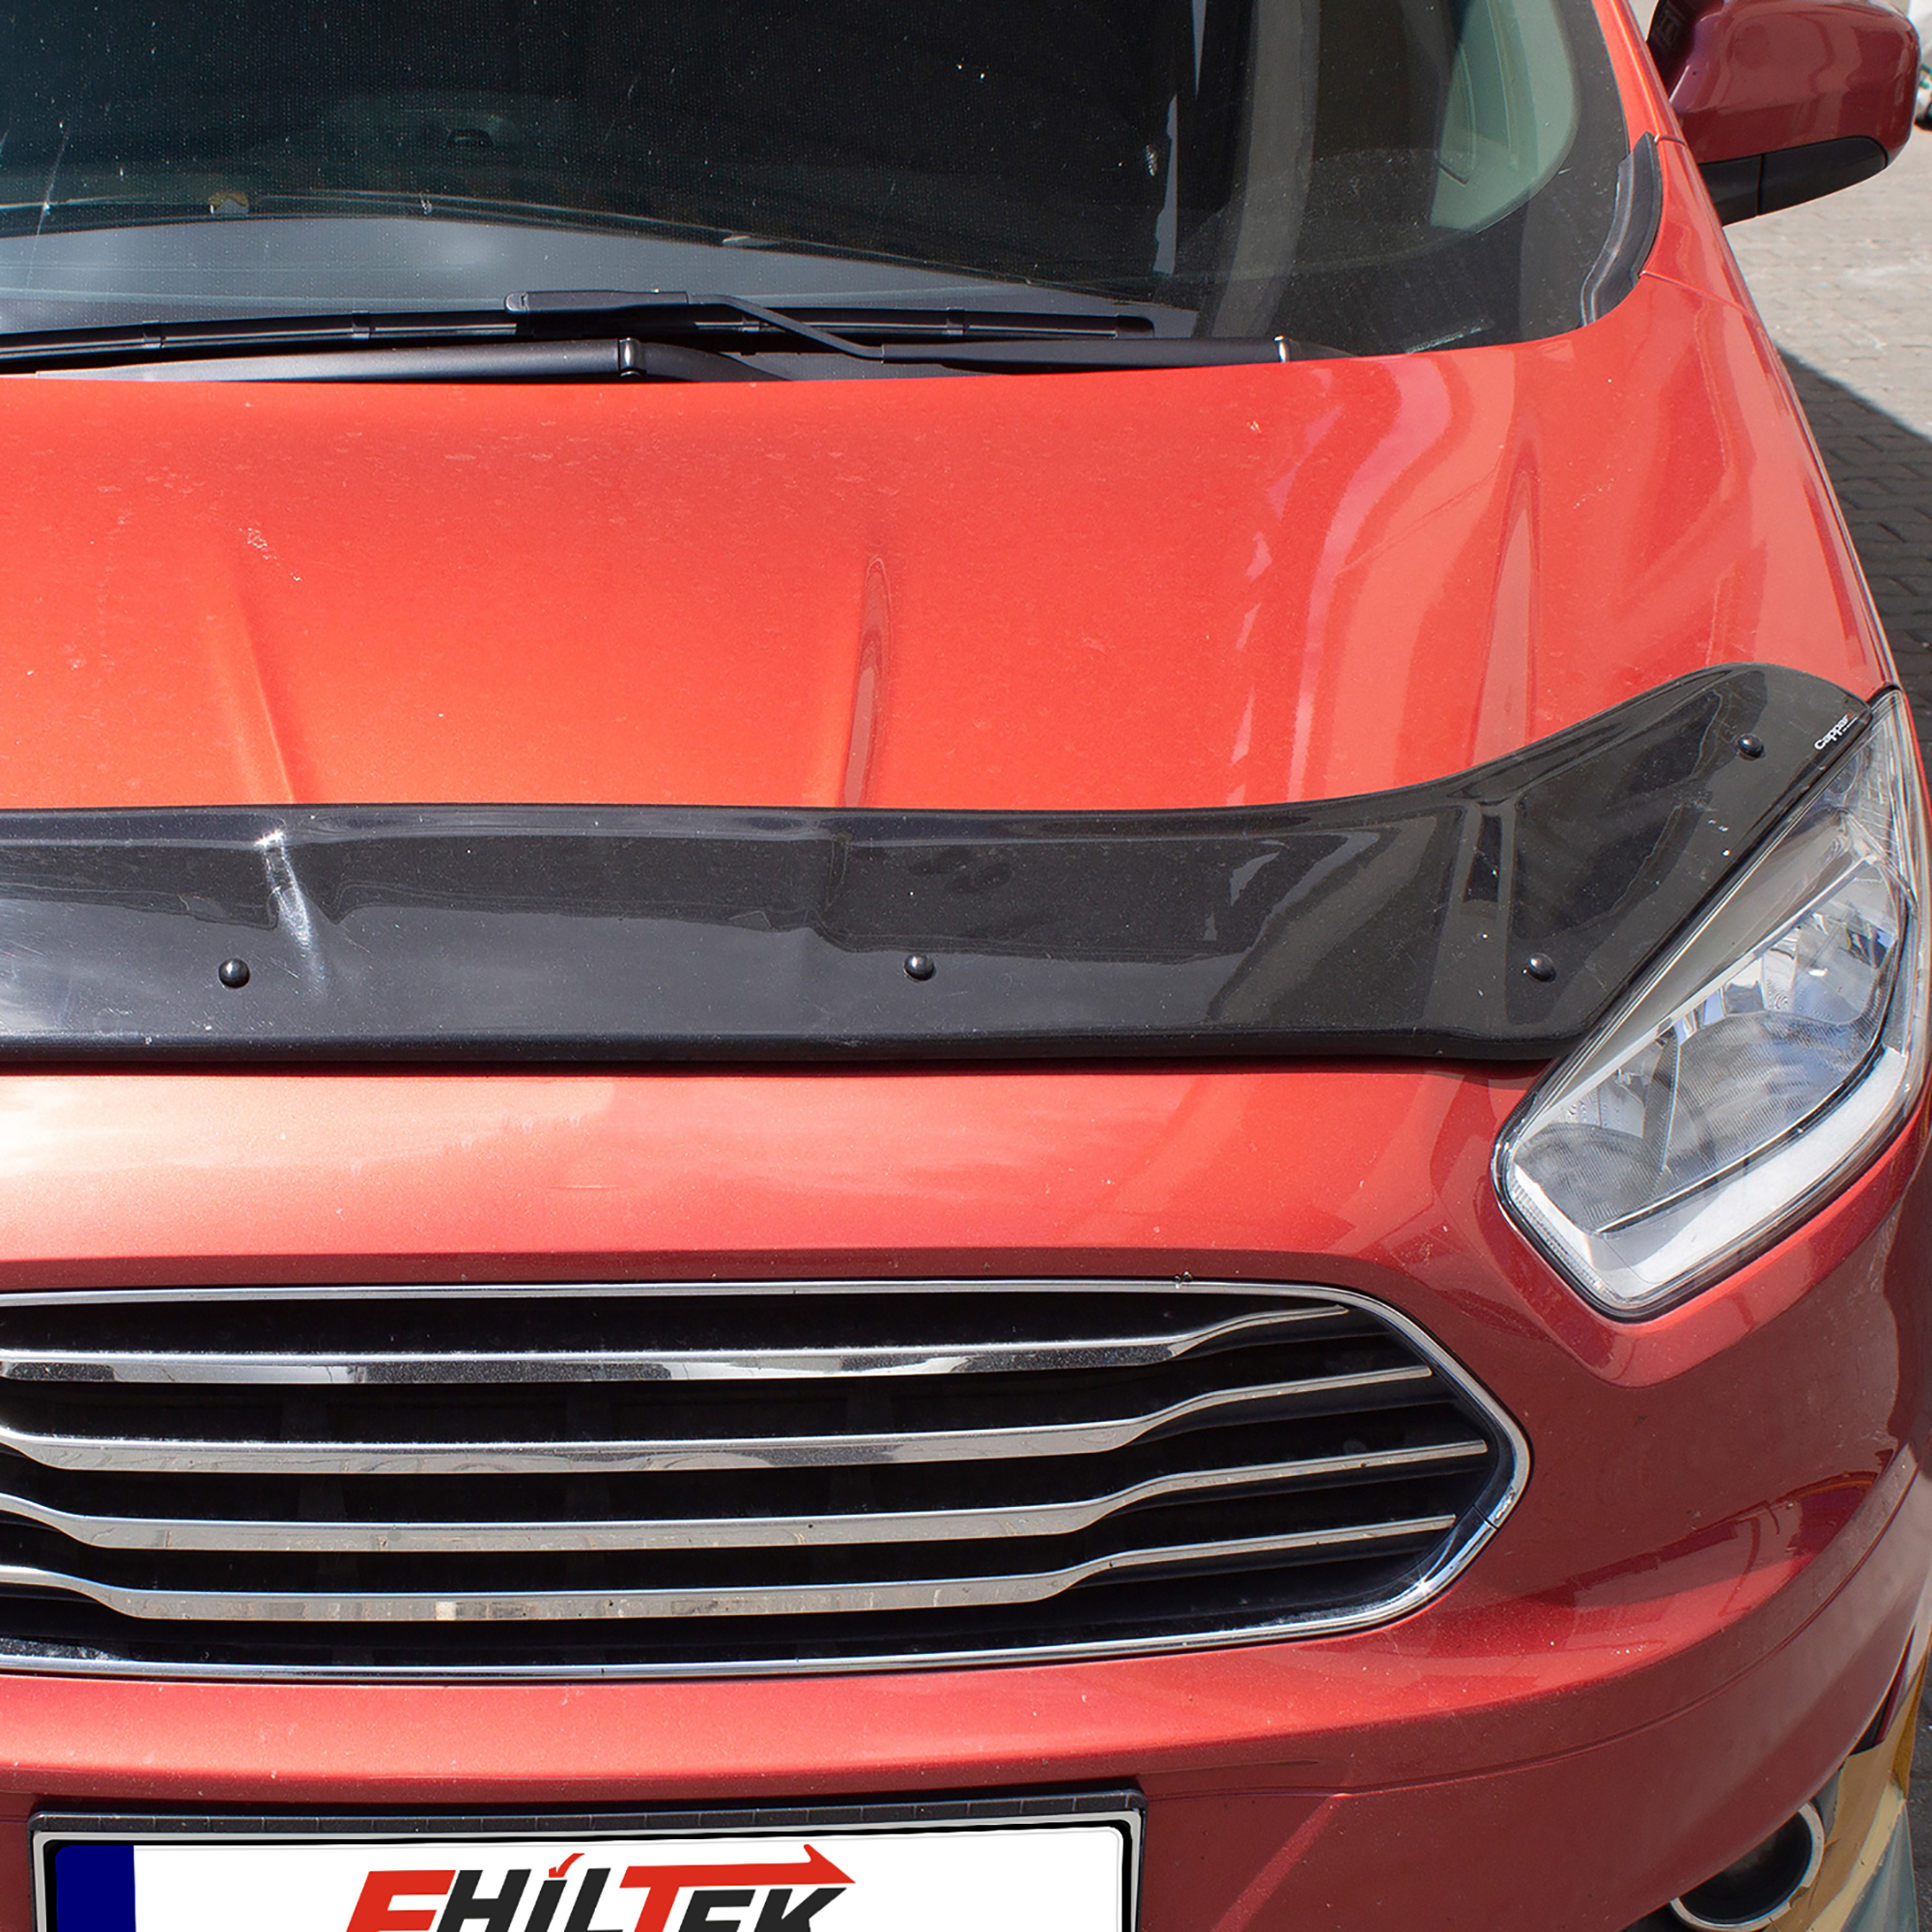 Ford Tourneo Courier (2014+) - Ön Kaput Rüzgarlığı - (1 Parça ABS Plastik) - (TİCARİ-4 mm)